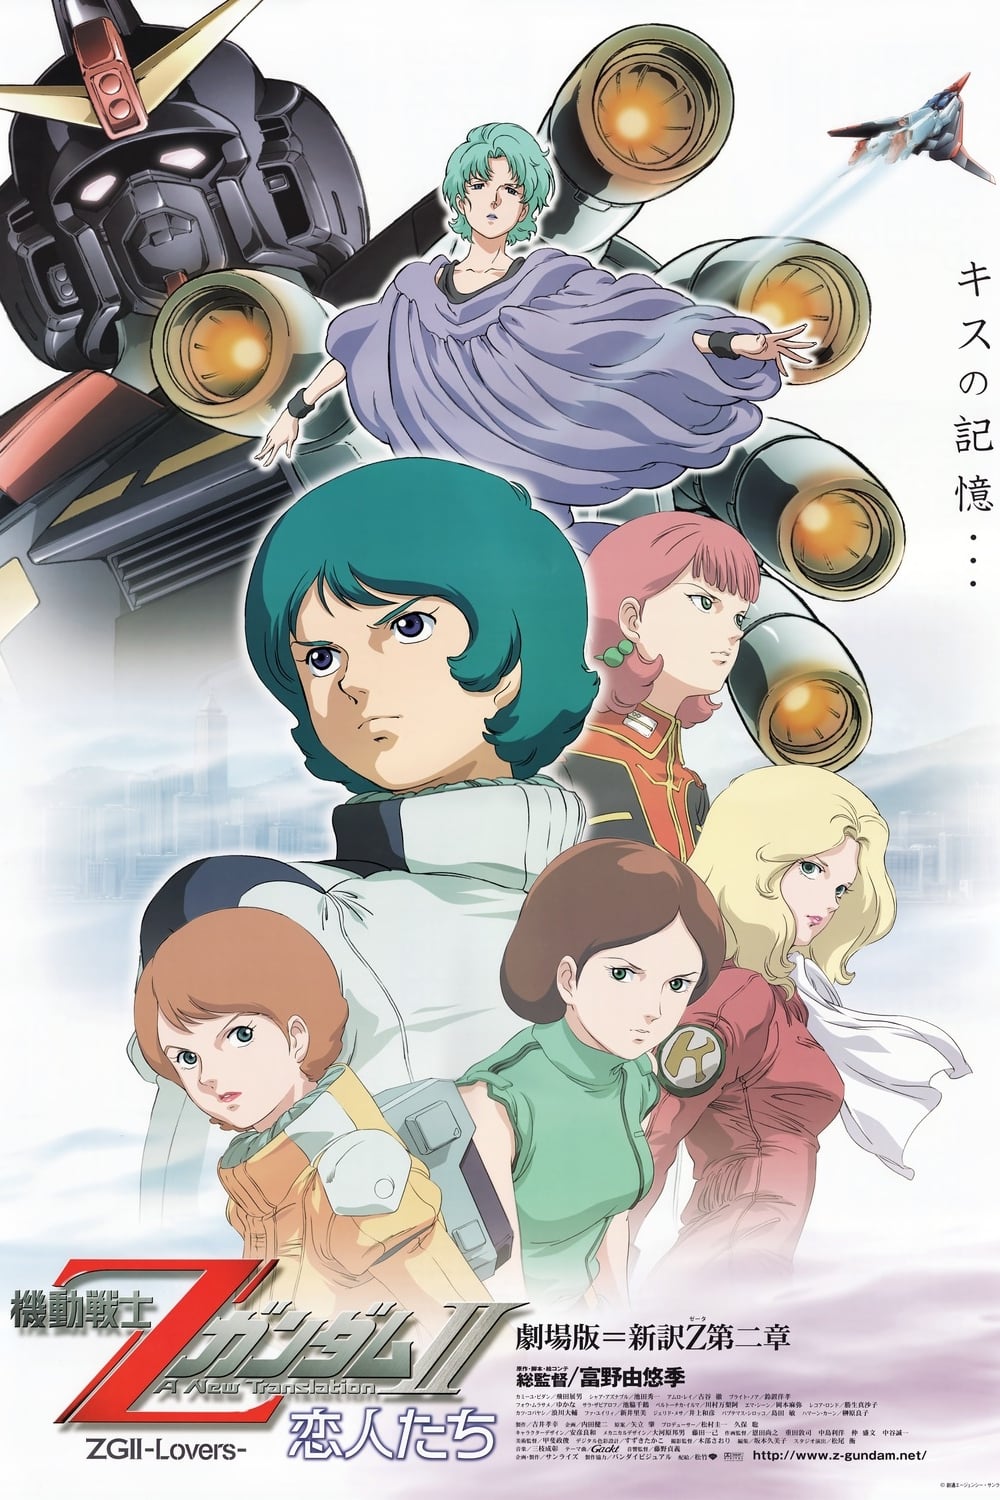 Mobile Suit Zeta Gundam A New Translation II: Lovers (2005)